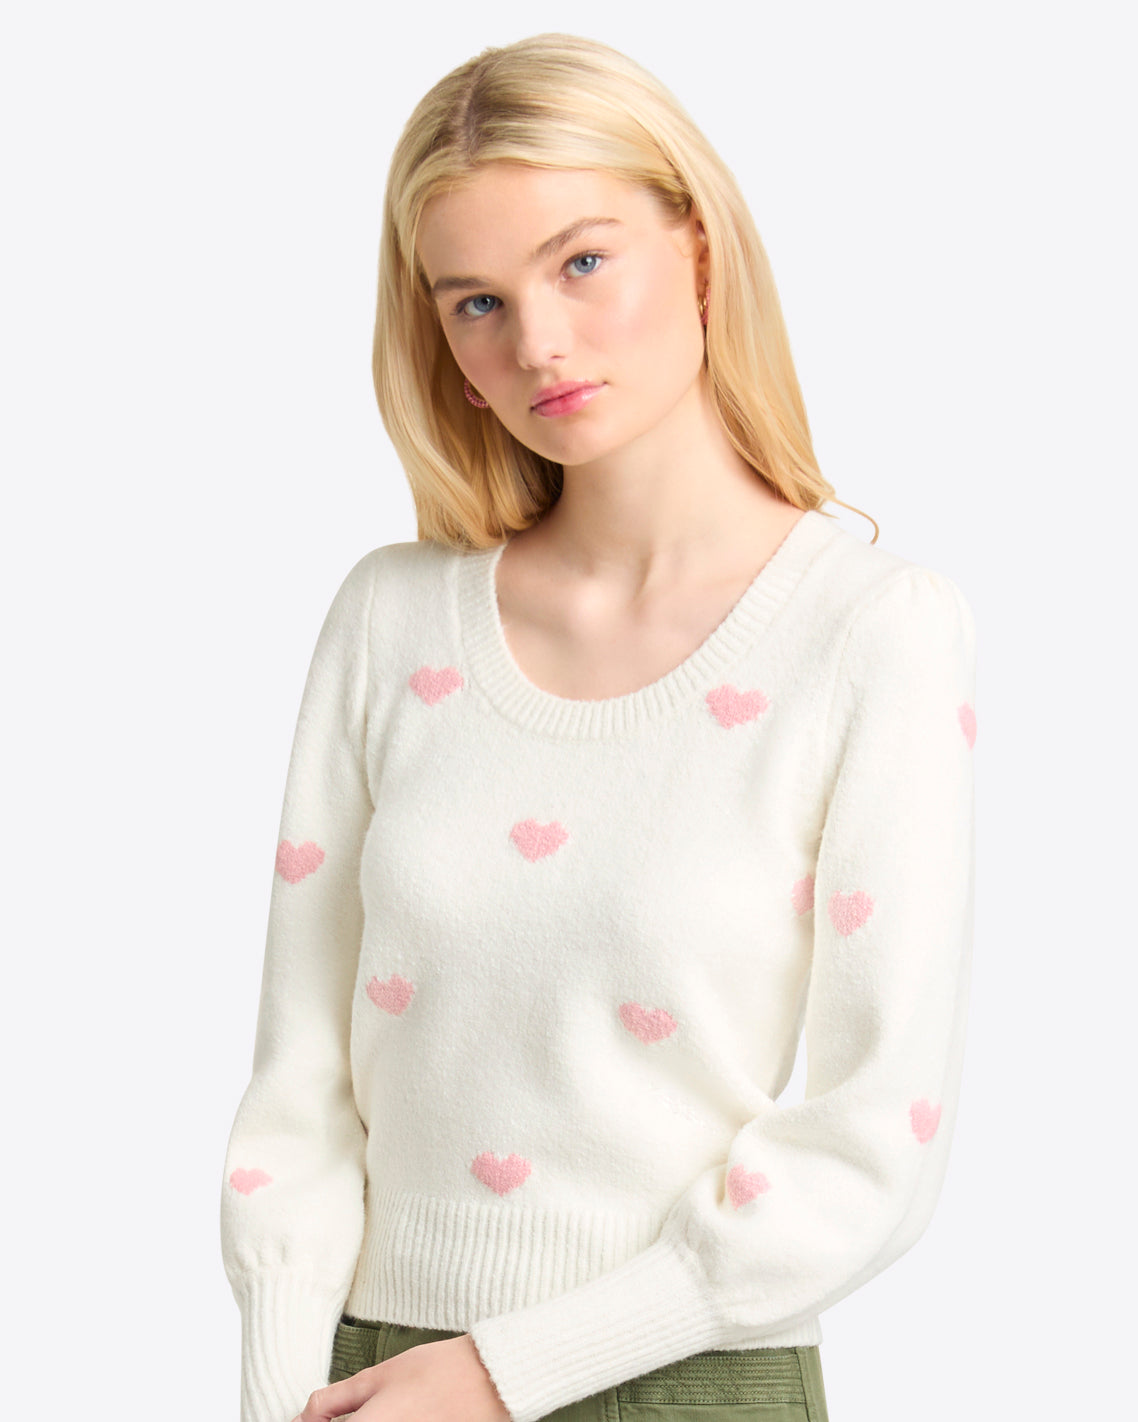  Heart Sweater